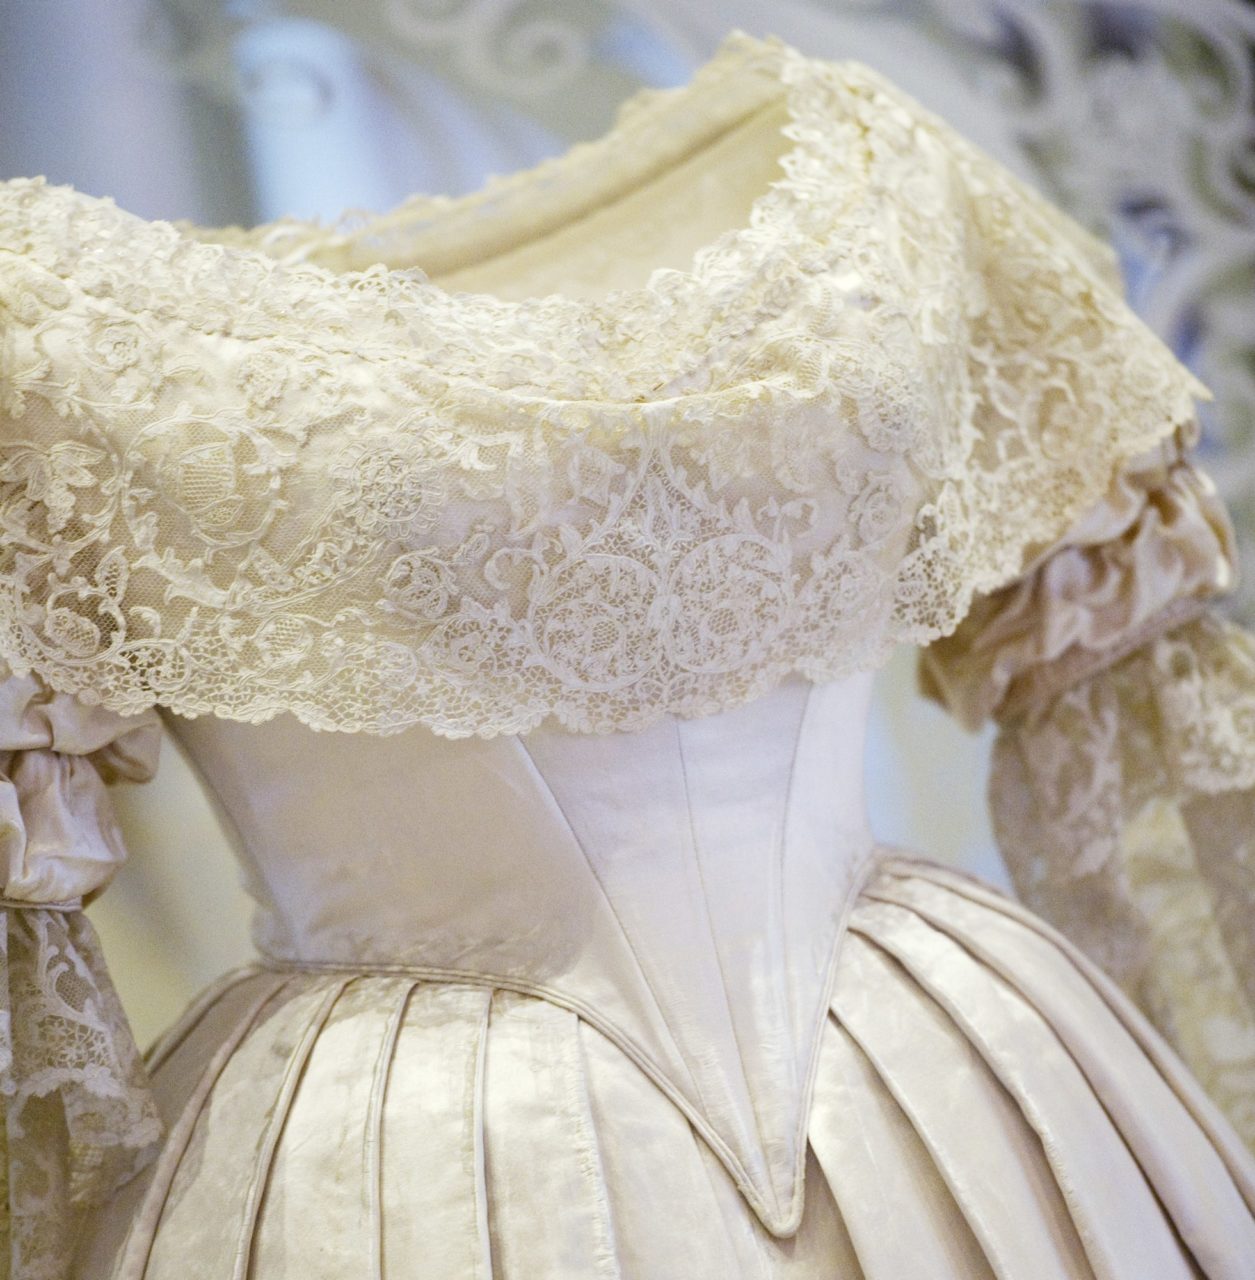 8 – Queen Victoria's Wedding Dress   Fashion History Timeline